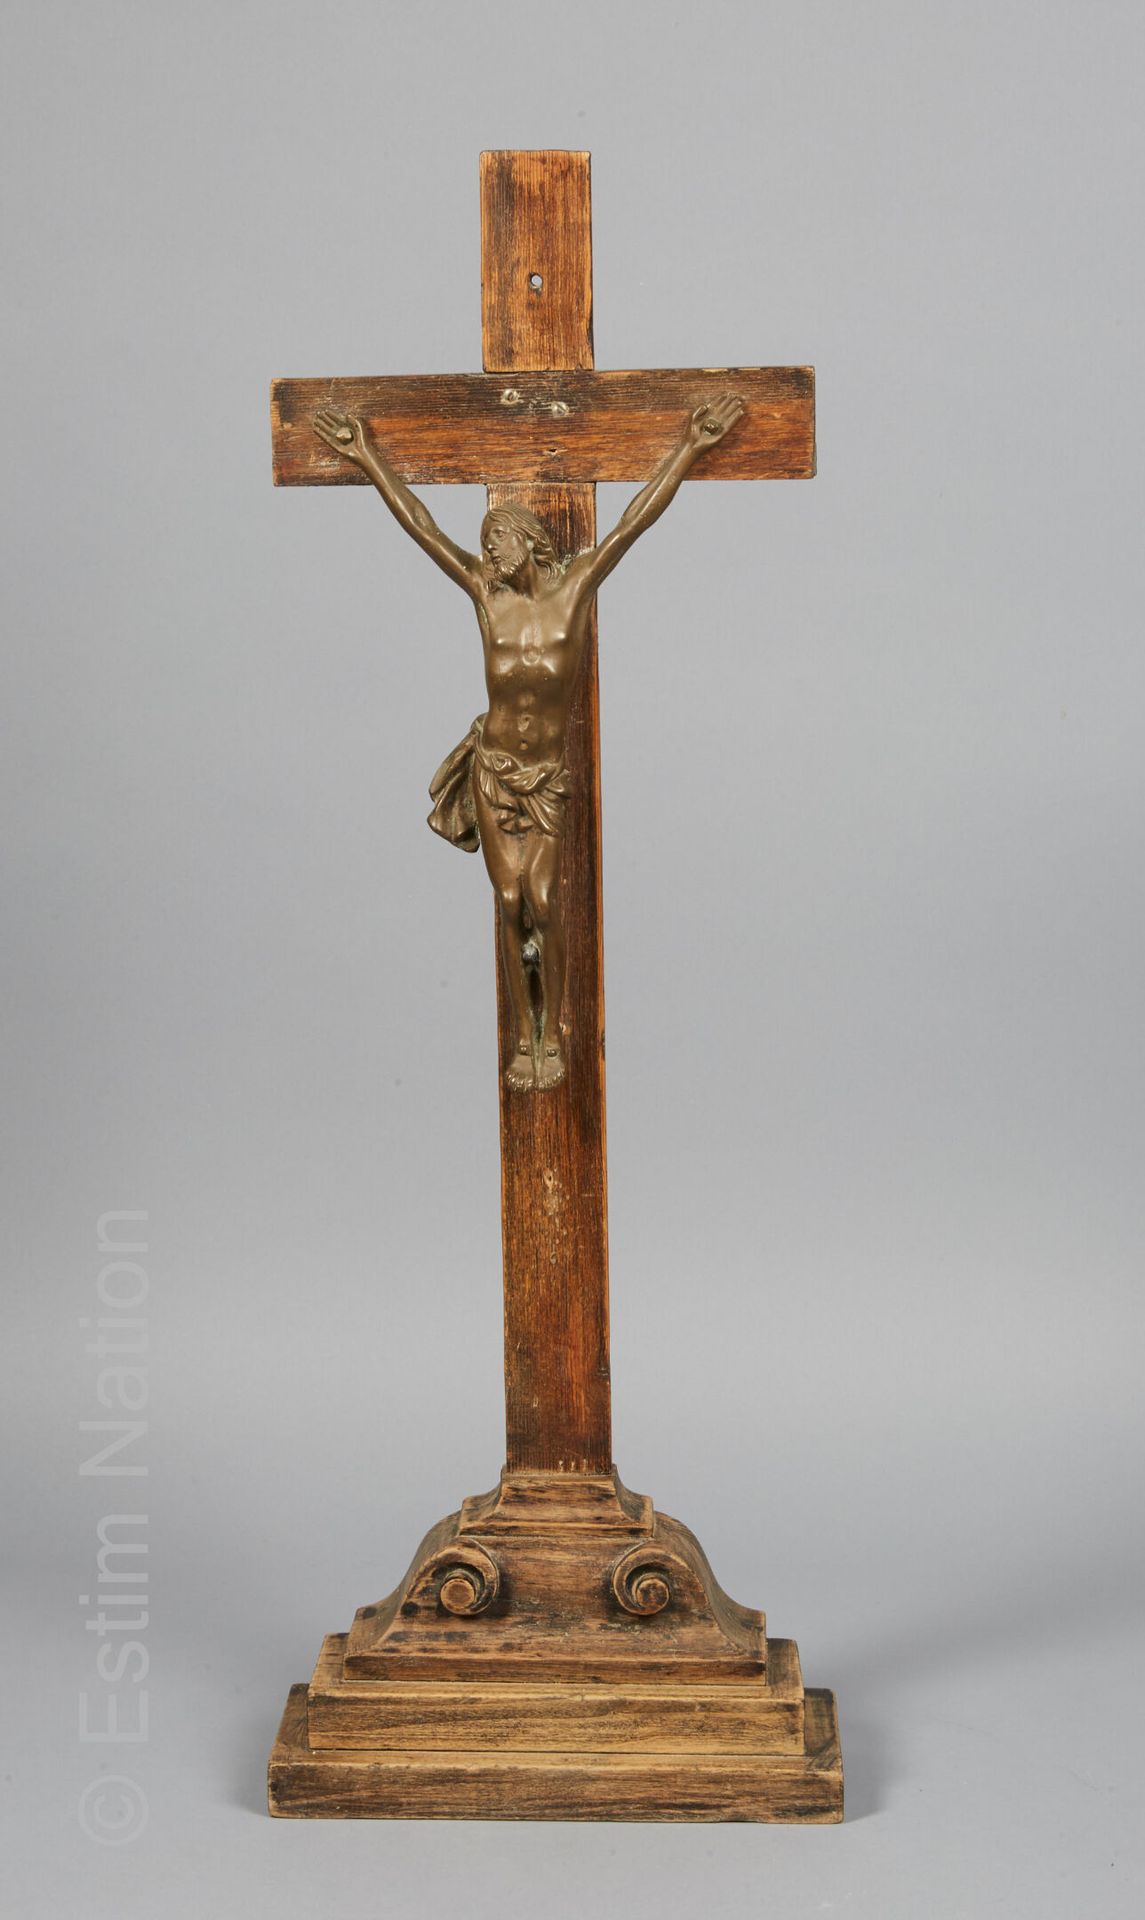 CHRIST EN BRONZE 铜制基督在清漆木制十字架上，放在一个阶梯式模制底座上。



尺寸基督：高度：29厘米

总高度：70厘米 



(木头上的&hellip;